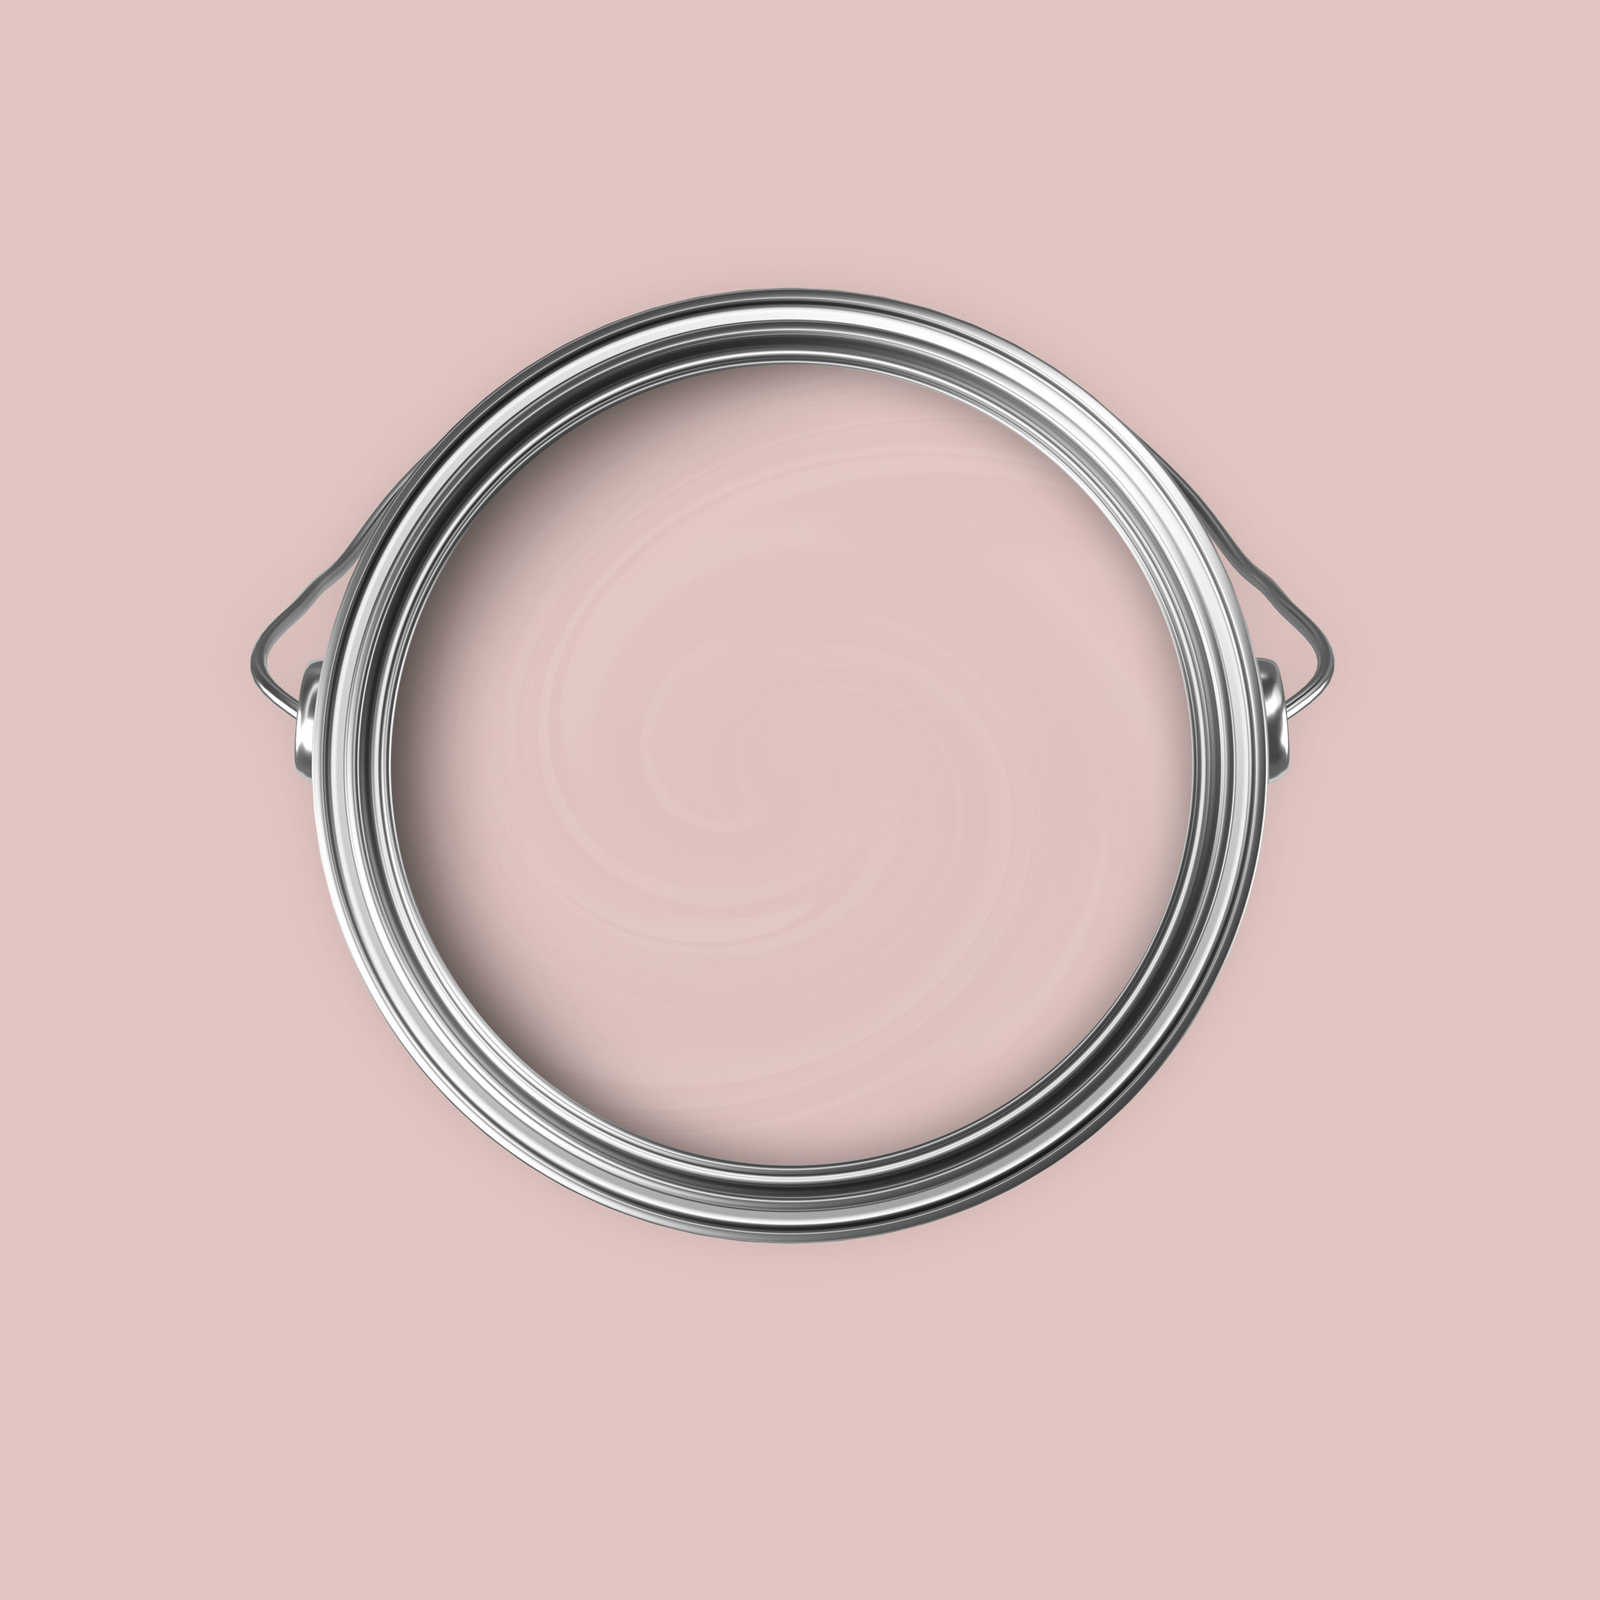             Pittura murale Premium Rosa Antico Soft »Natural Nude« NW1013 – 5 litri
        